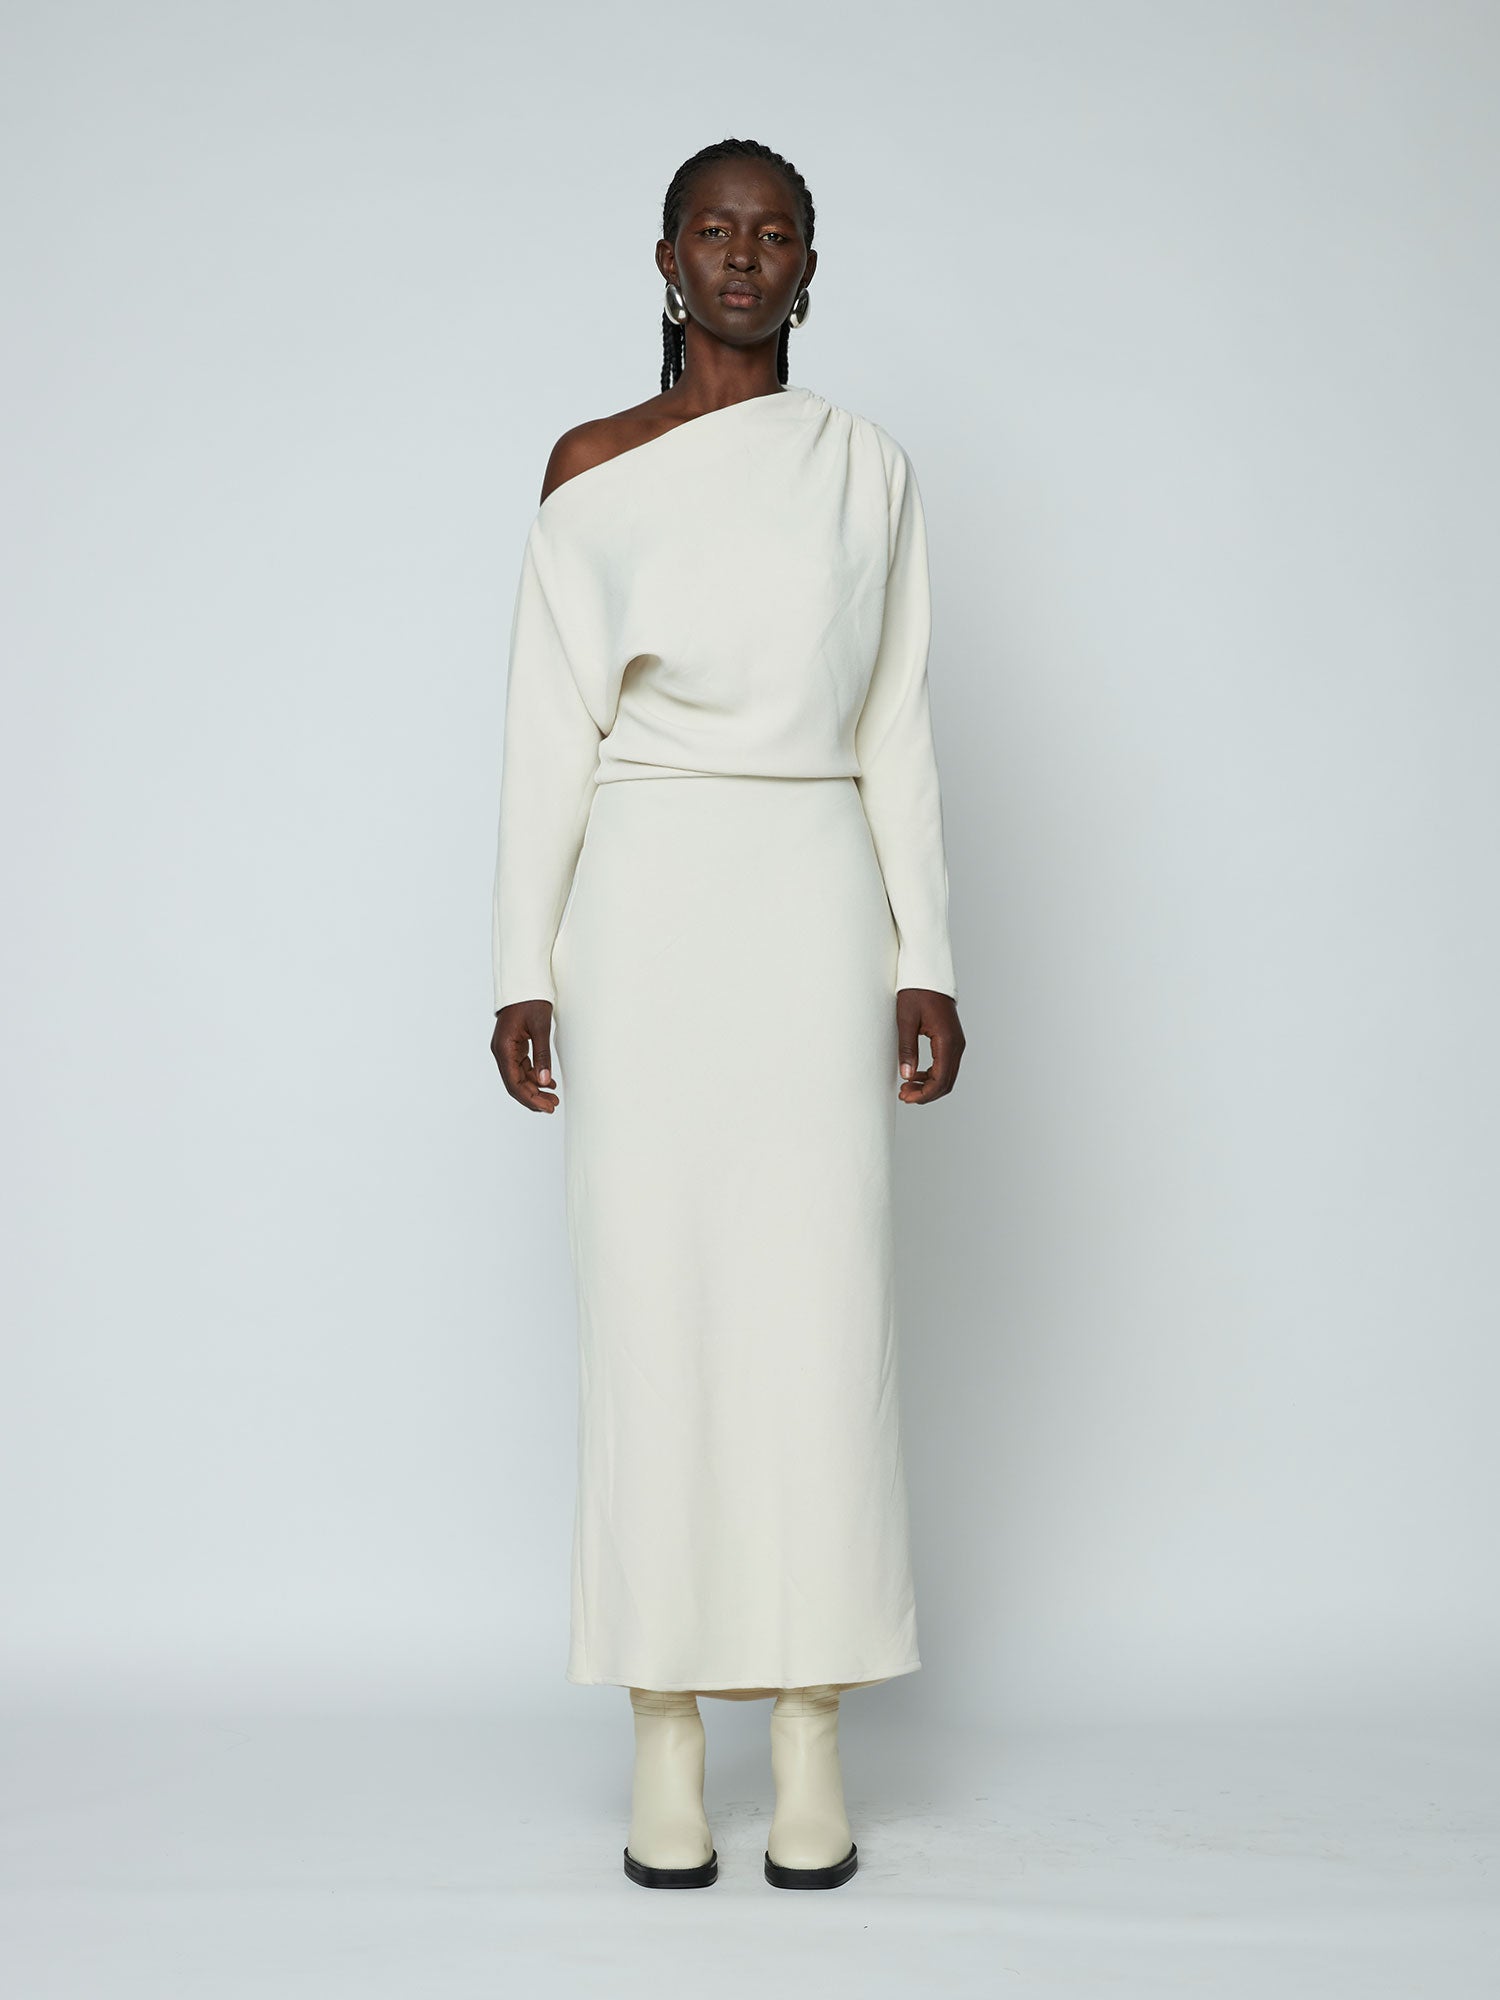 Wynn Hamlyn Holly Maxi Dress in Ivory available at The New Trend Australia.